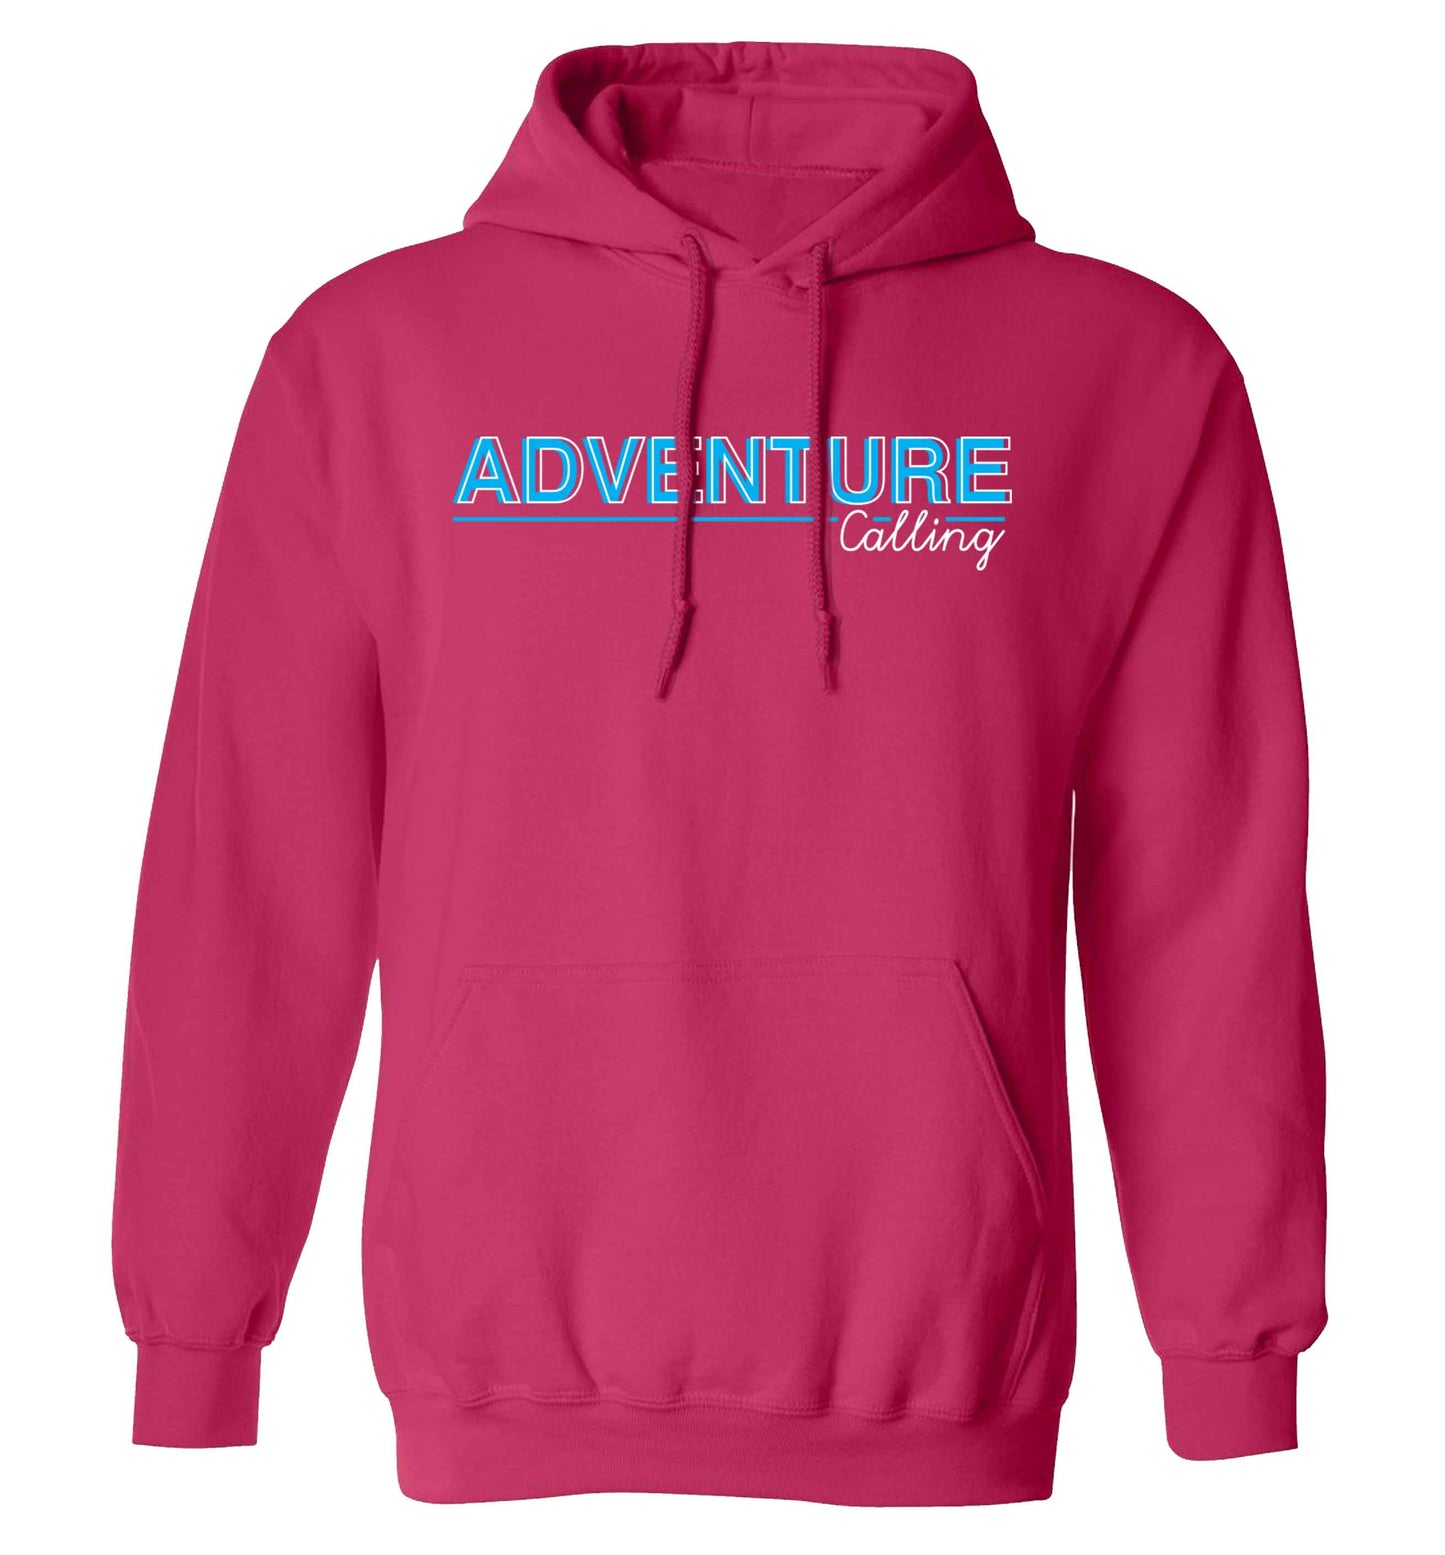 Adventure calling adults unisex pink hoodie 2XL